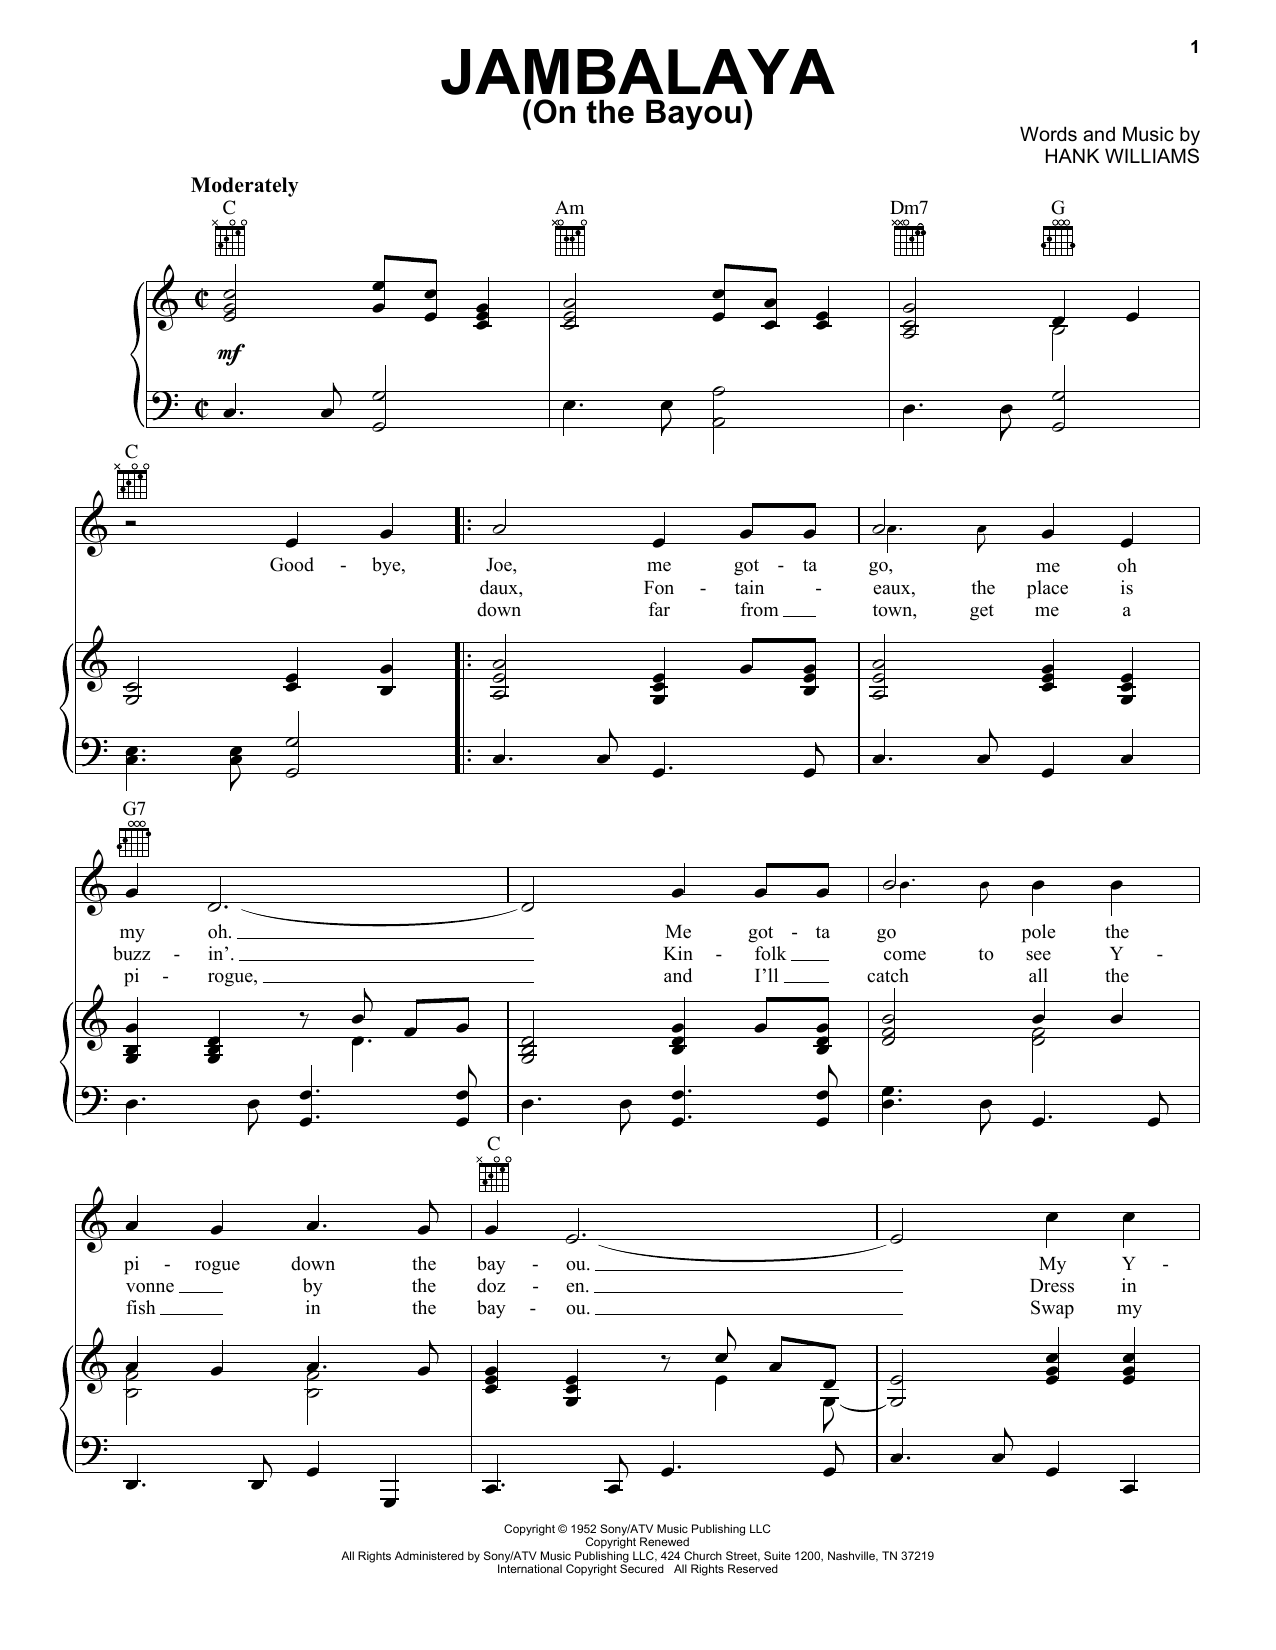 Download Hank Williams Jambalaya (On The Bayou) Sheet Music and learn how to play Baritone Ukulele PDF digital score in minutes